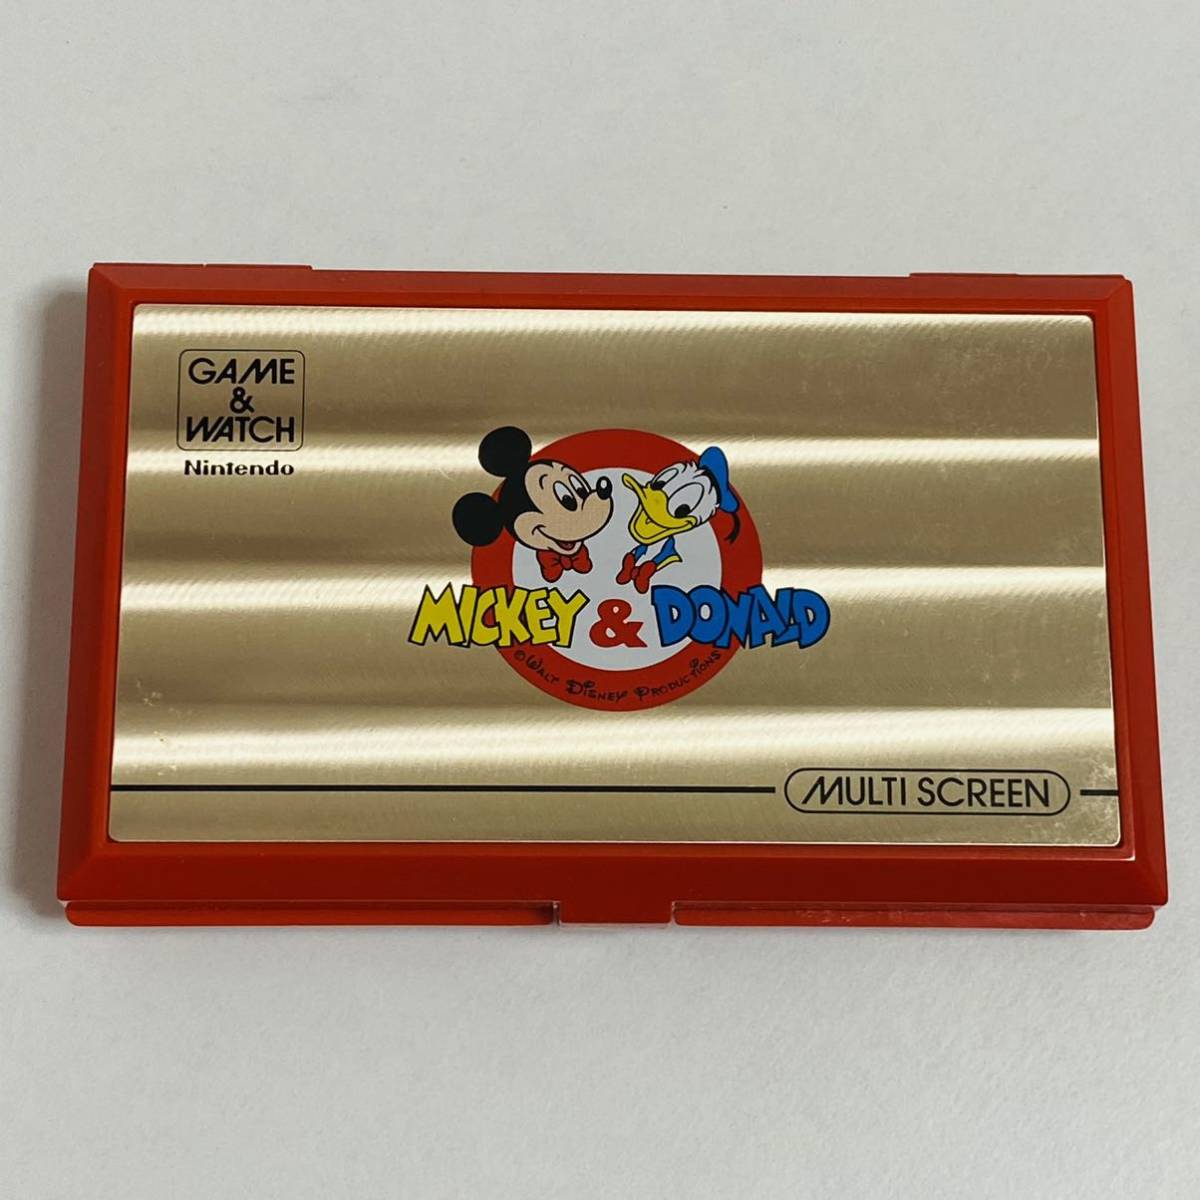 [ operation goods ]GAME&WATCH Game & Watch multi screen Mickey & Donald DM-53 Nintendo nintendo 